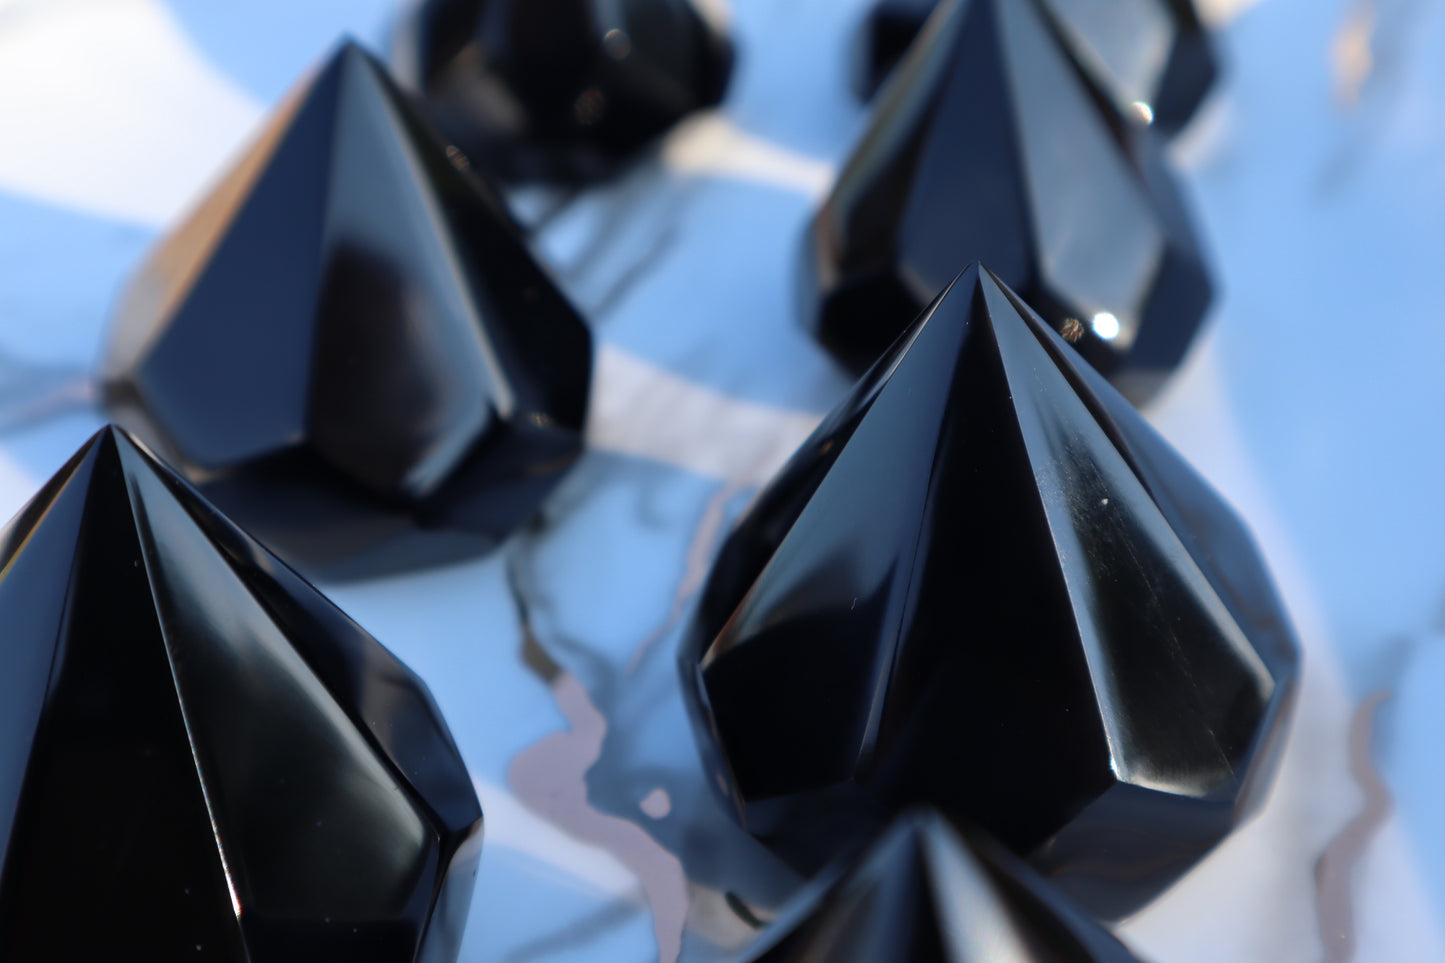 Obsidian Crystals